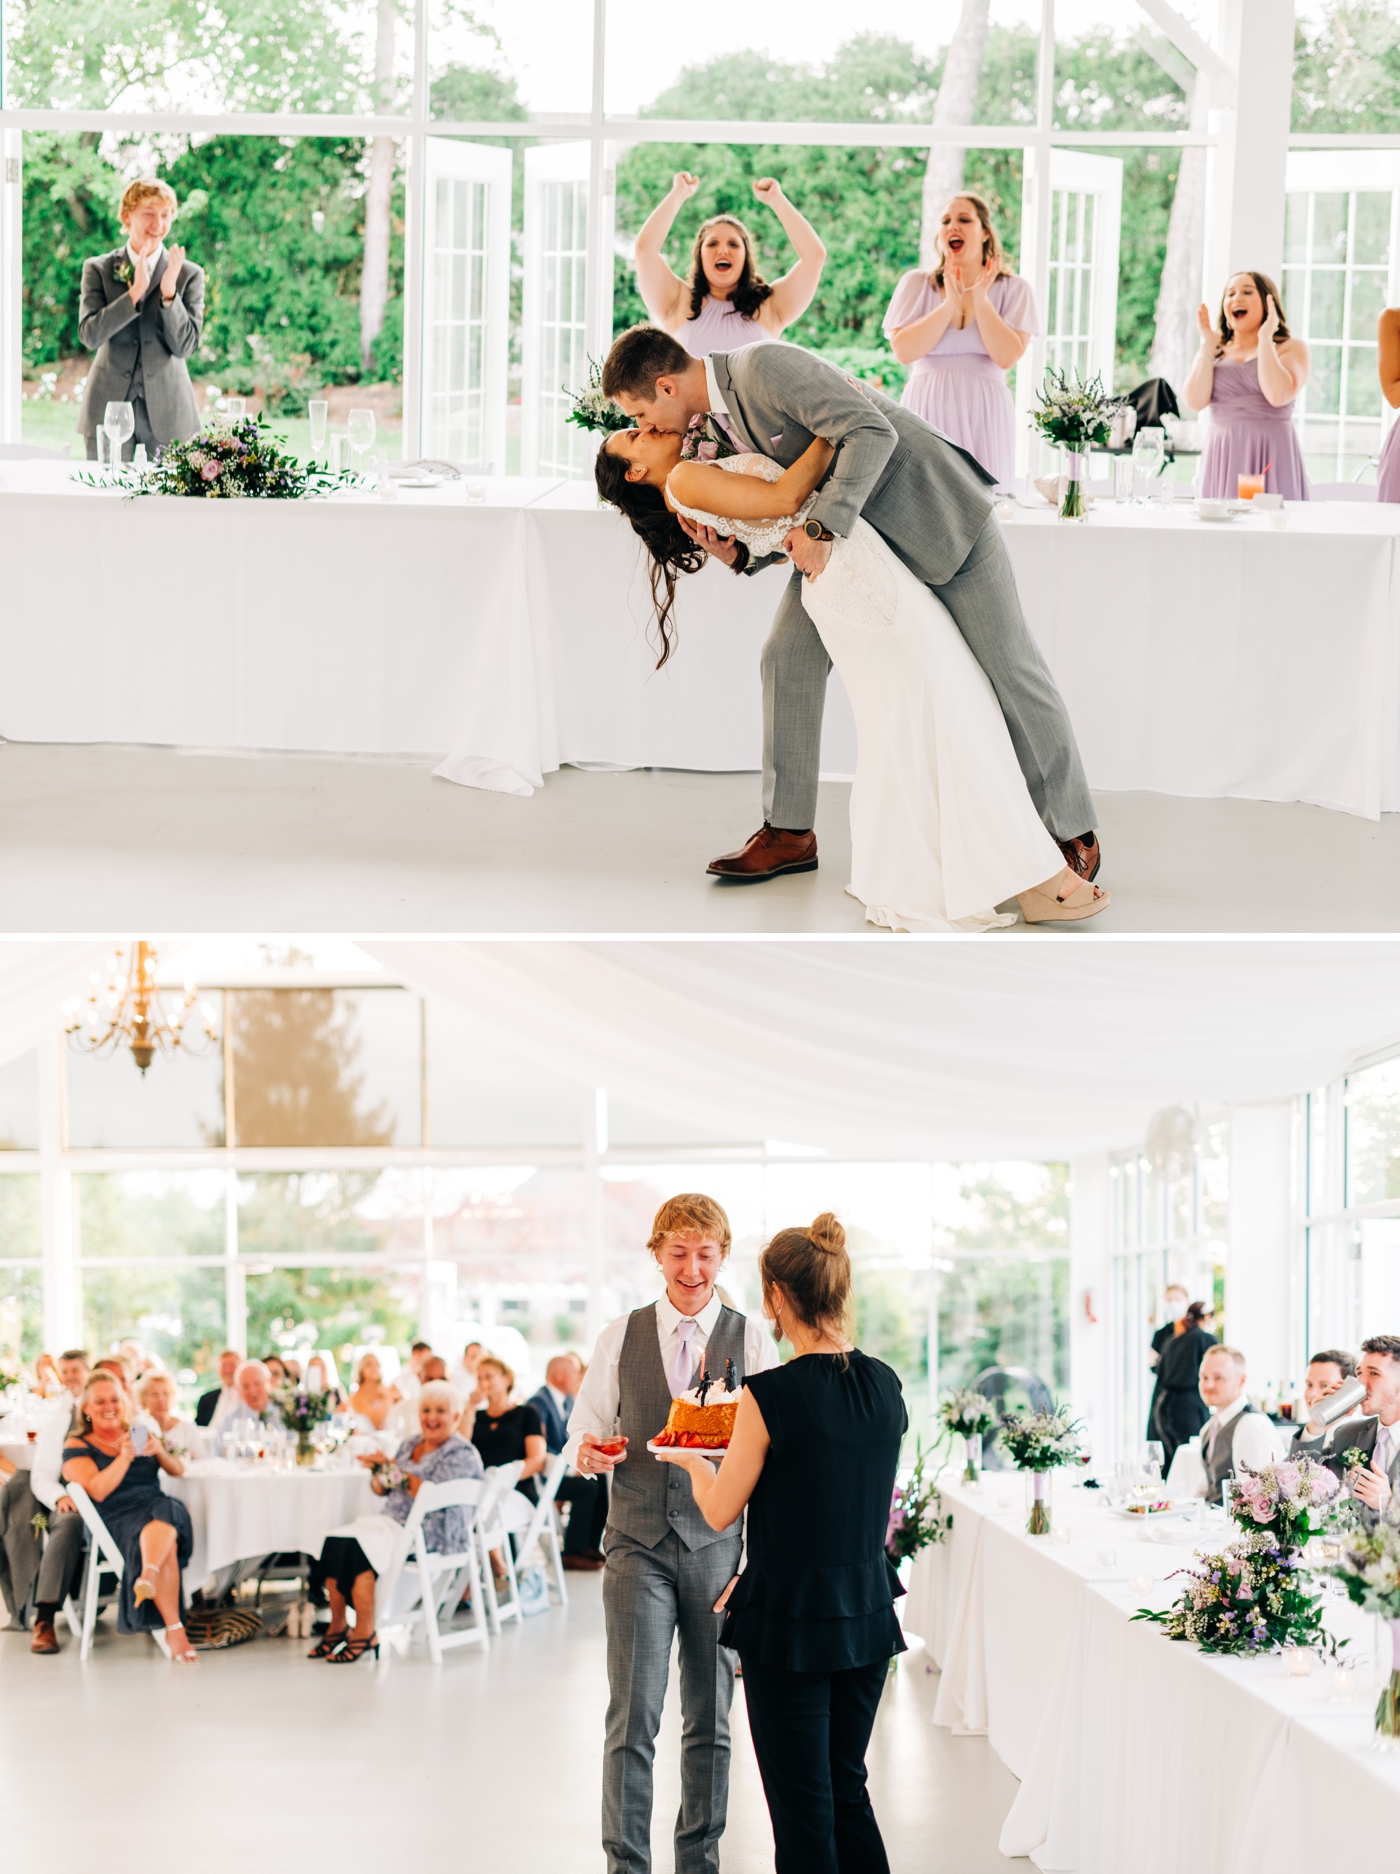 Wedding reception at the Ritz Charles Garden Pavillion